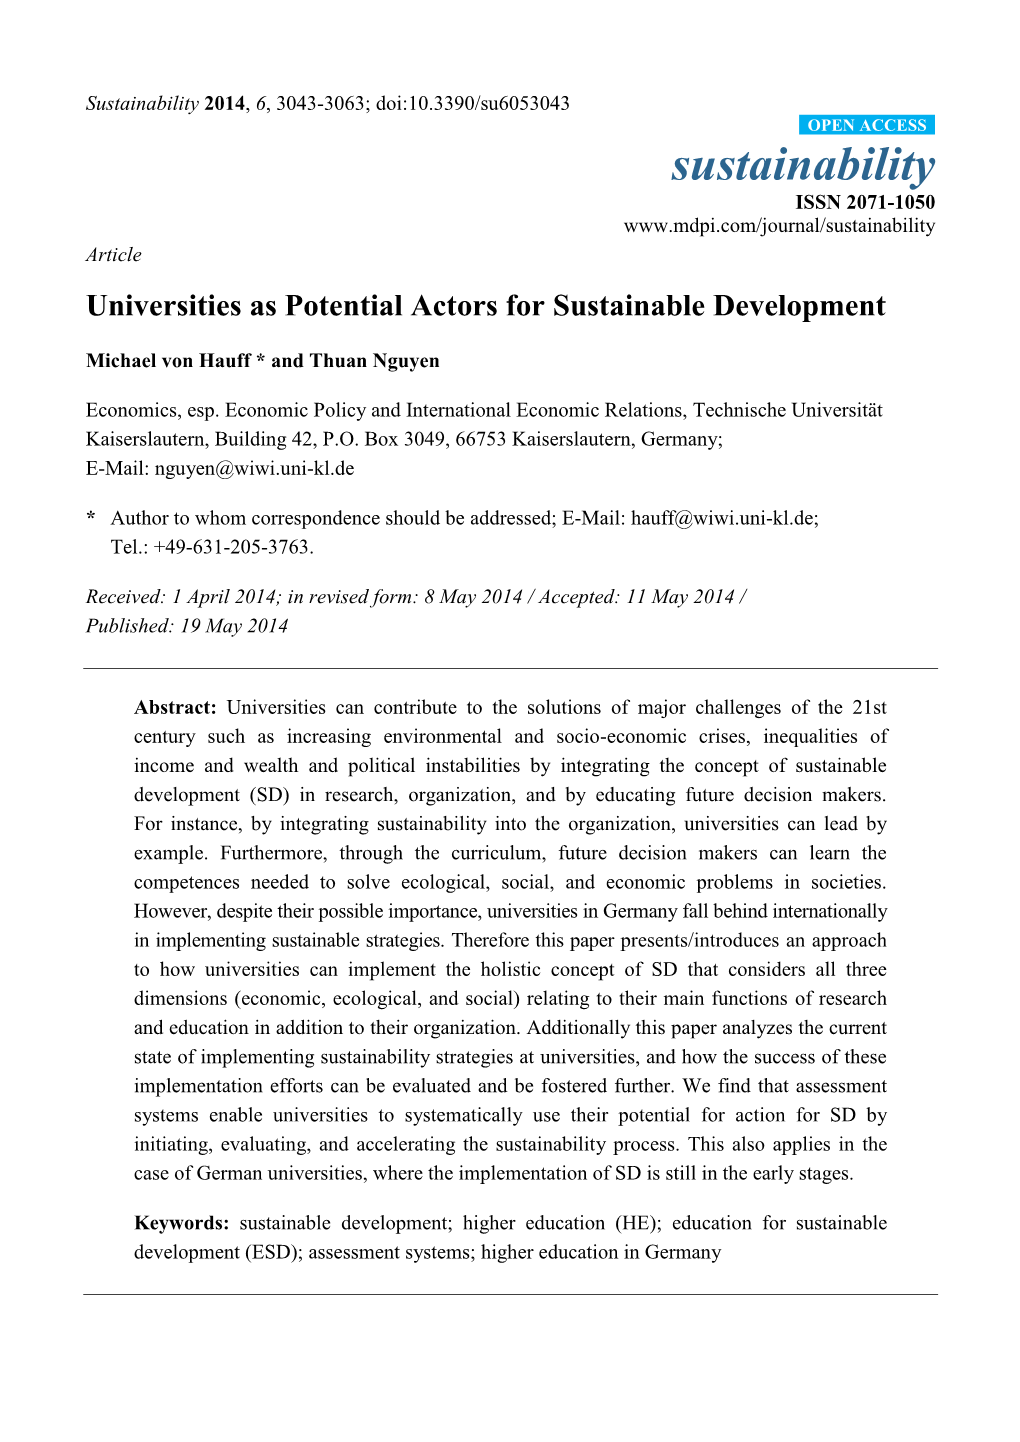 Universities As Potential Actors for Sustainable Development